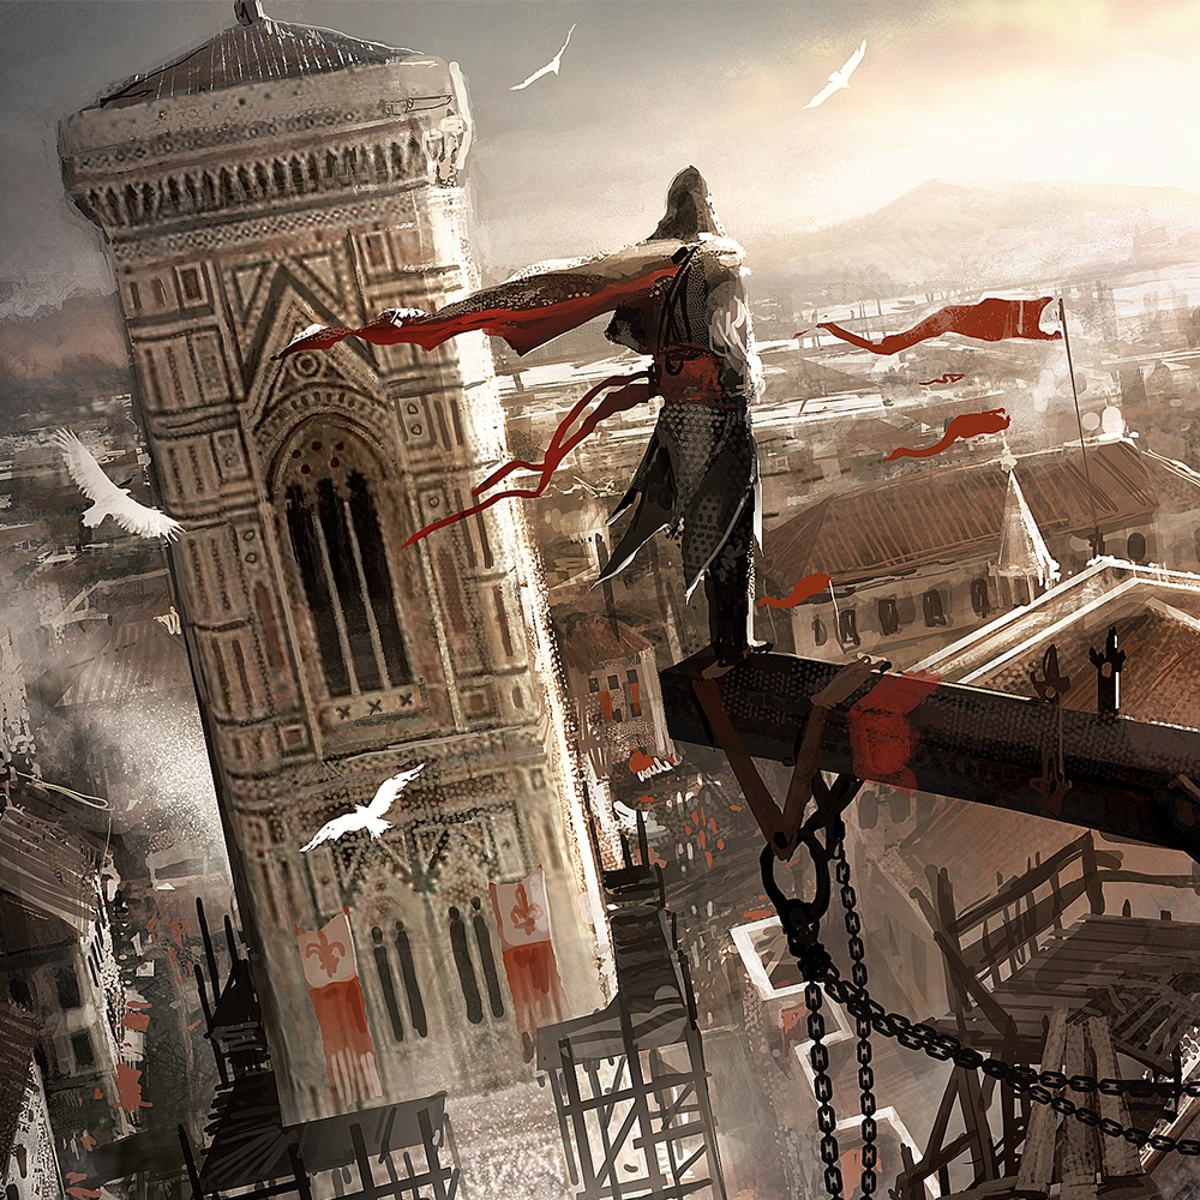 Assassin's Creed 2  Assassins creed, Assassin's creed, Assassins creed 2